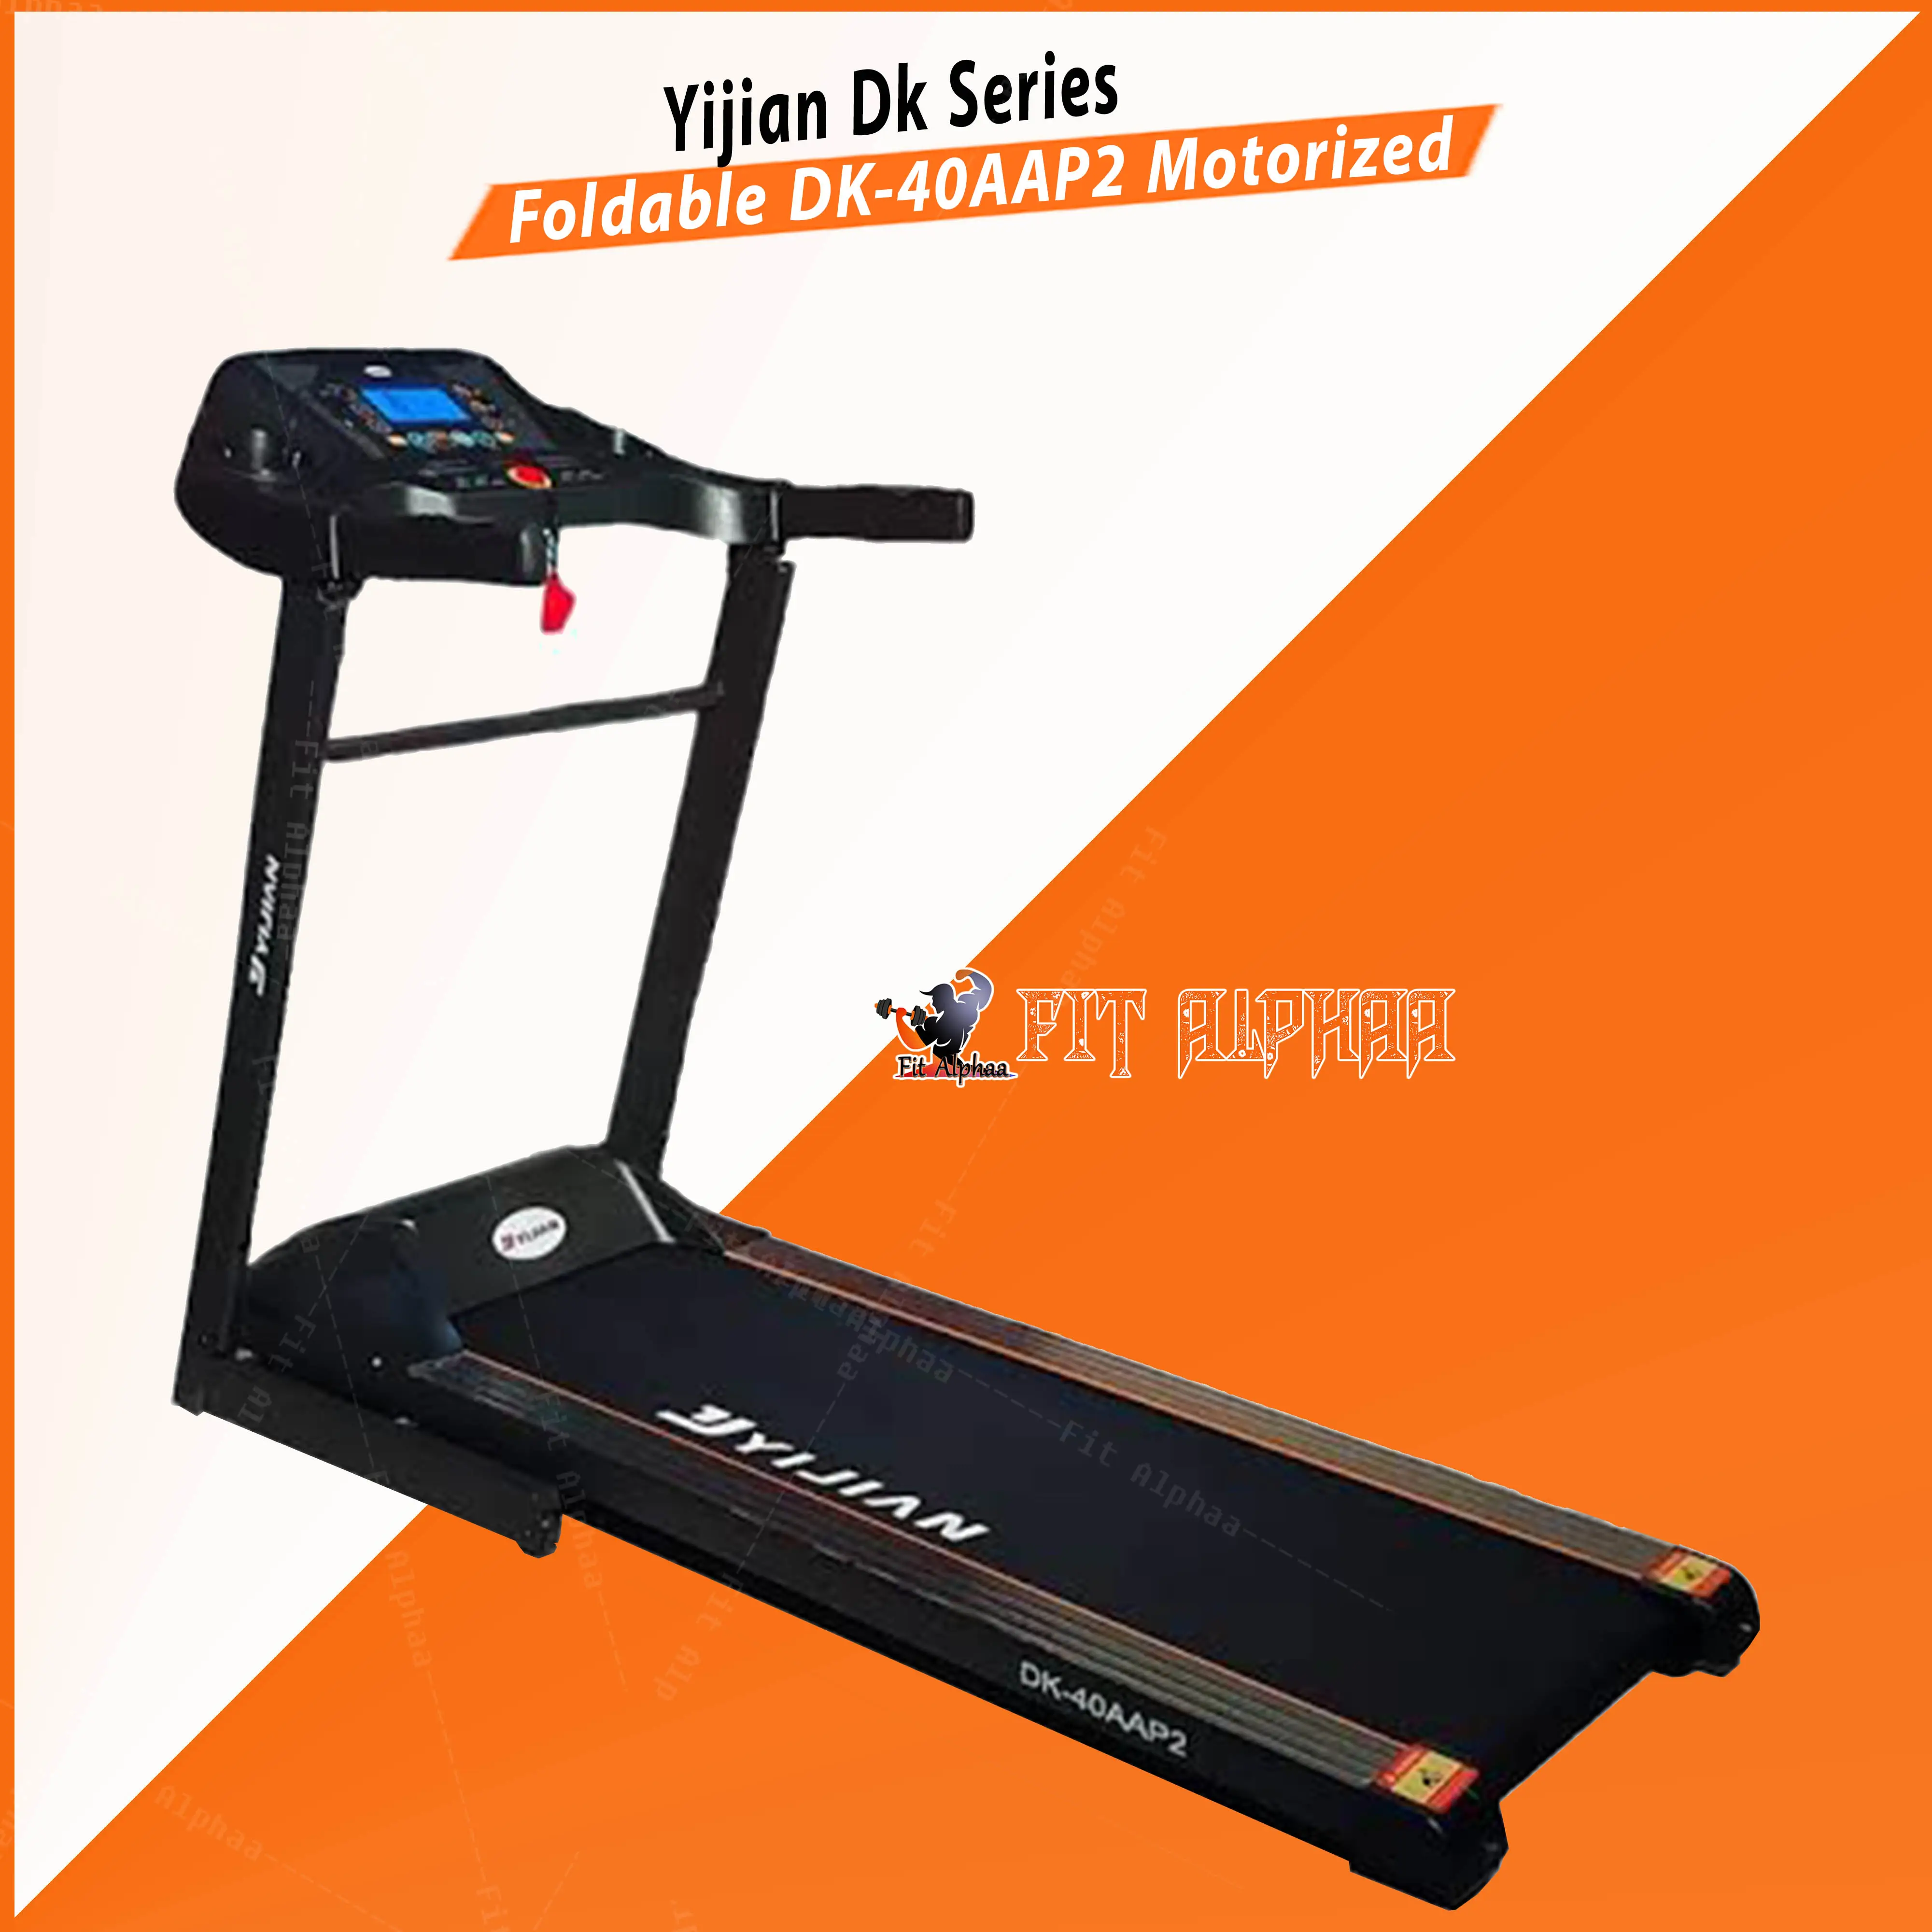 Yijian DK 40AAP2 Foldable Motorized Treadmill - Home Use Running Machine